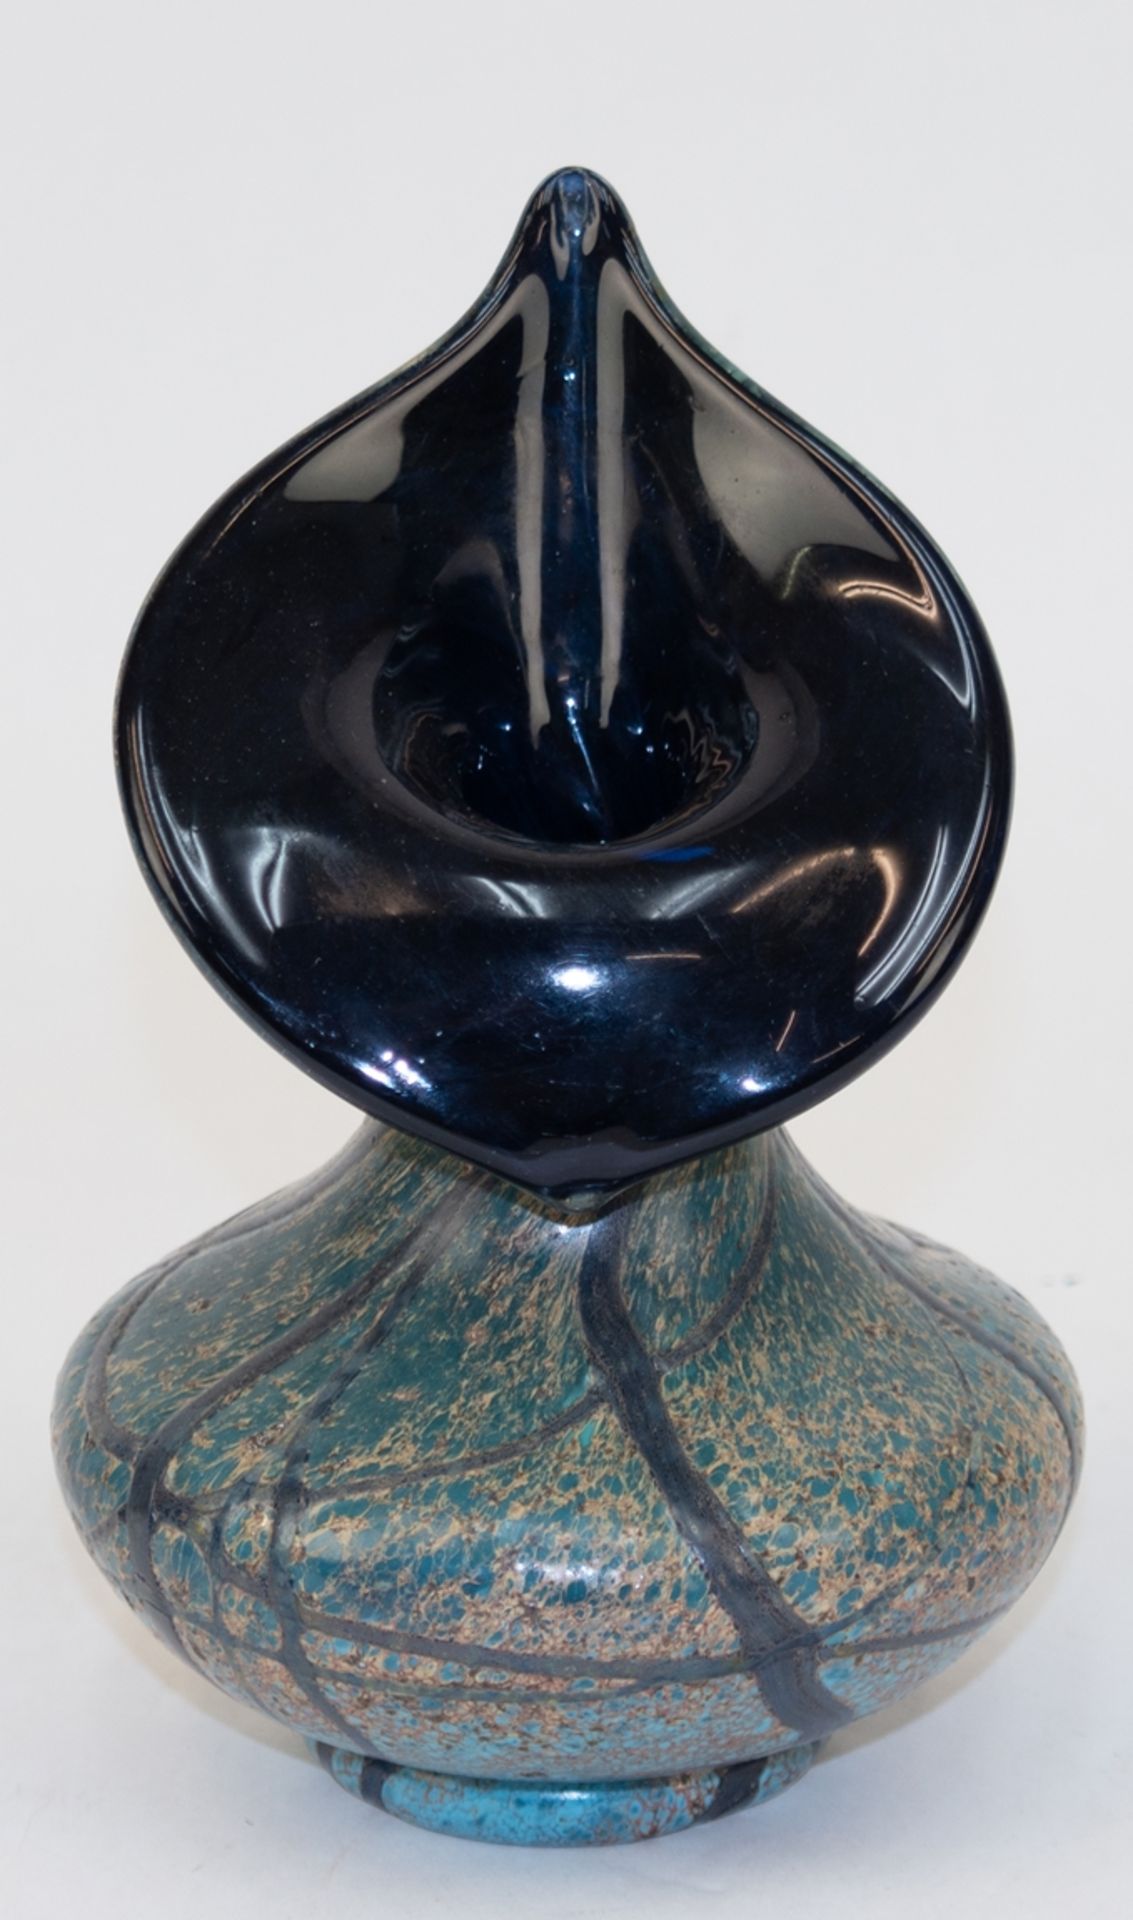 Jugendstil-Vase, Frankreich um 1900, blaues Glas mit farbigem Keramiküberfang, blütenförmige Öffnun